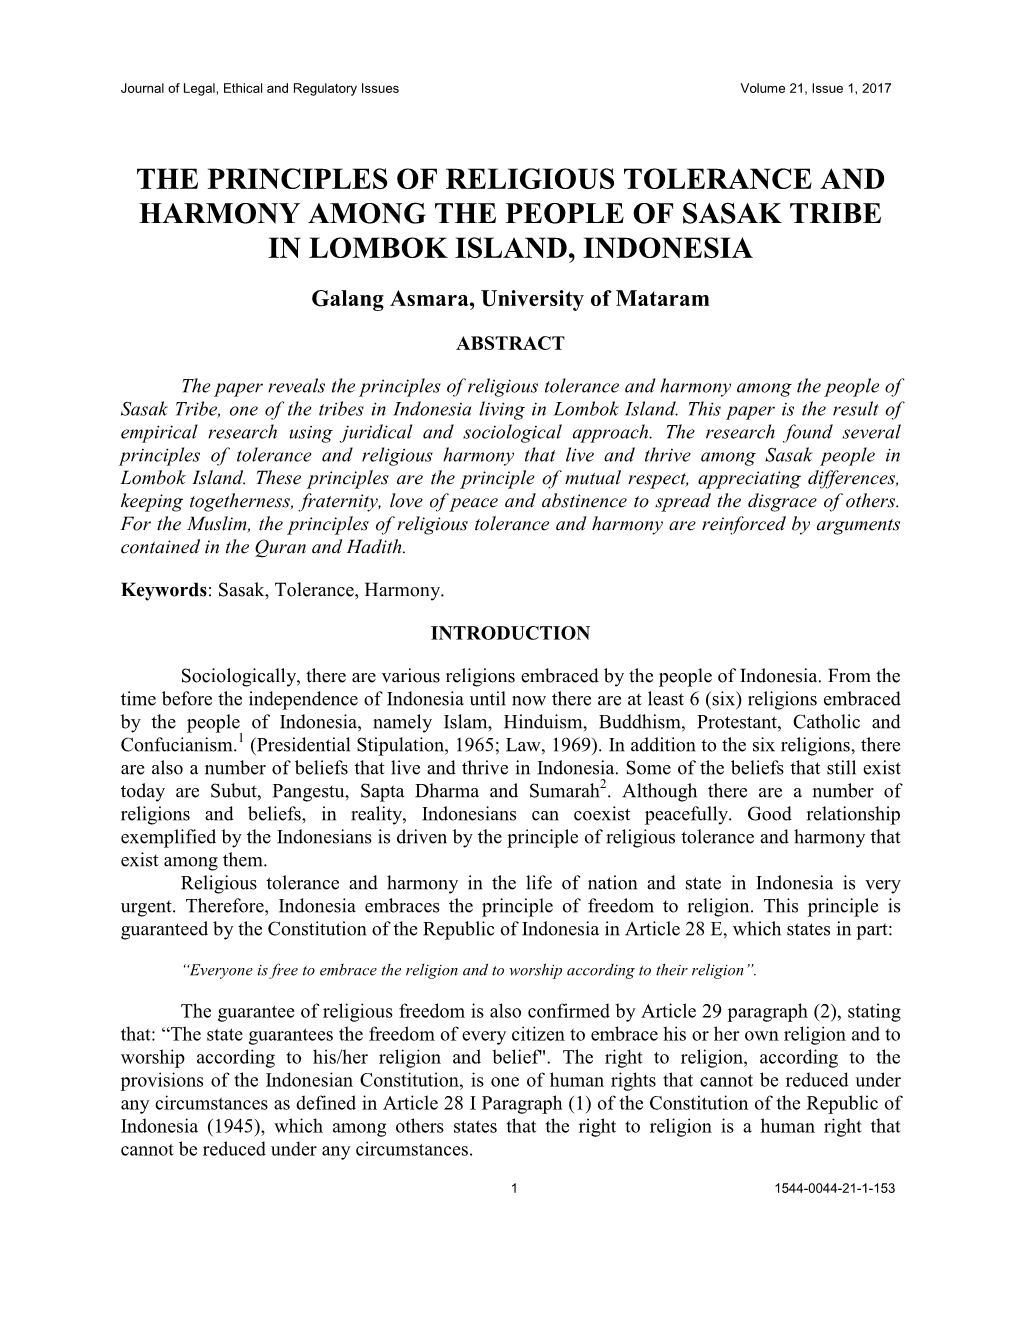 THE PRINCIPLES of RELIGIOUS TOLERANCE and HARMONY AMONG the PEOPLE of SASAK TRIBE in LOMBOK ISLAND, INDONESIA Galang Asmara, University of Mataram